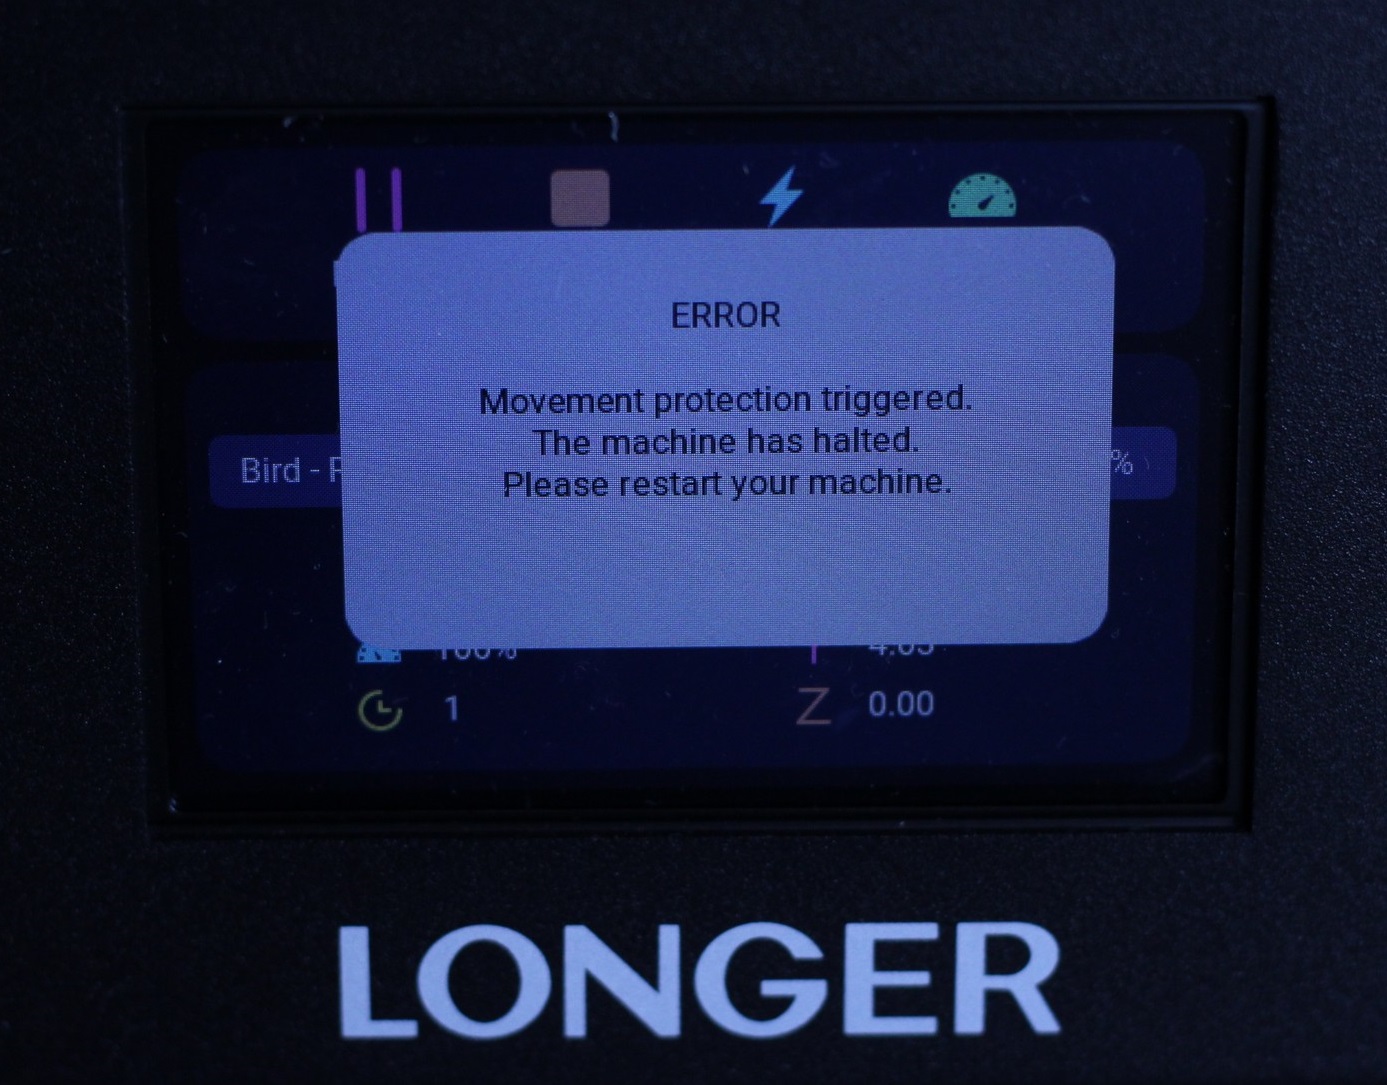 LONGER RAY5 movement trigger | LONGER RAY5 Laser Engraver Review